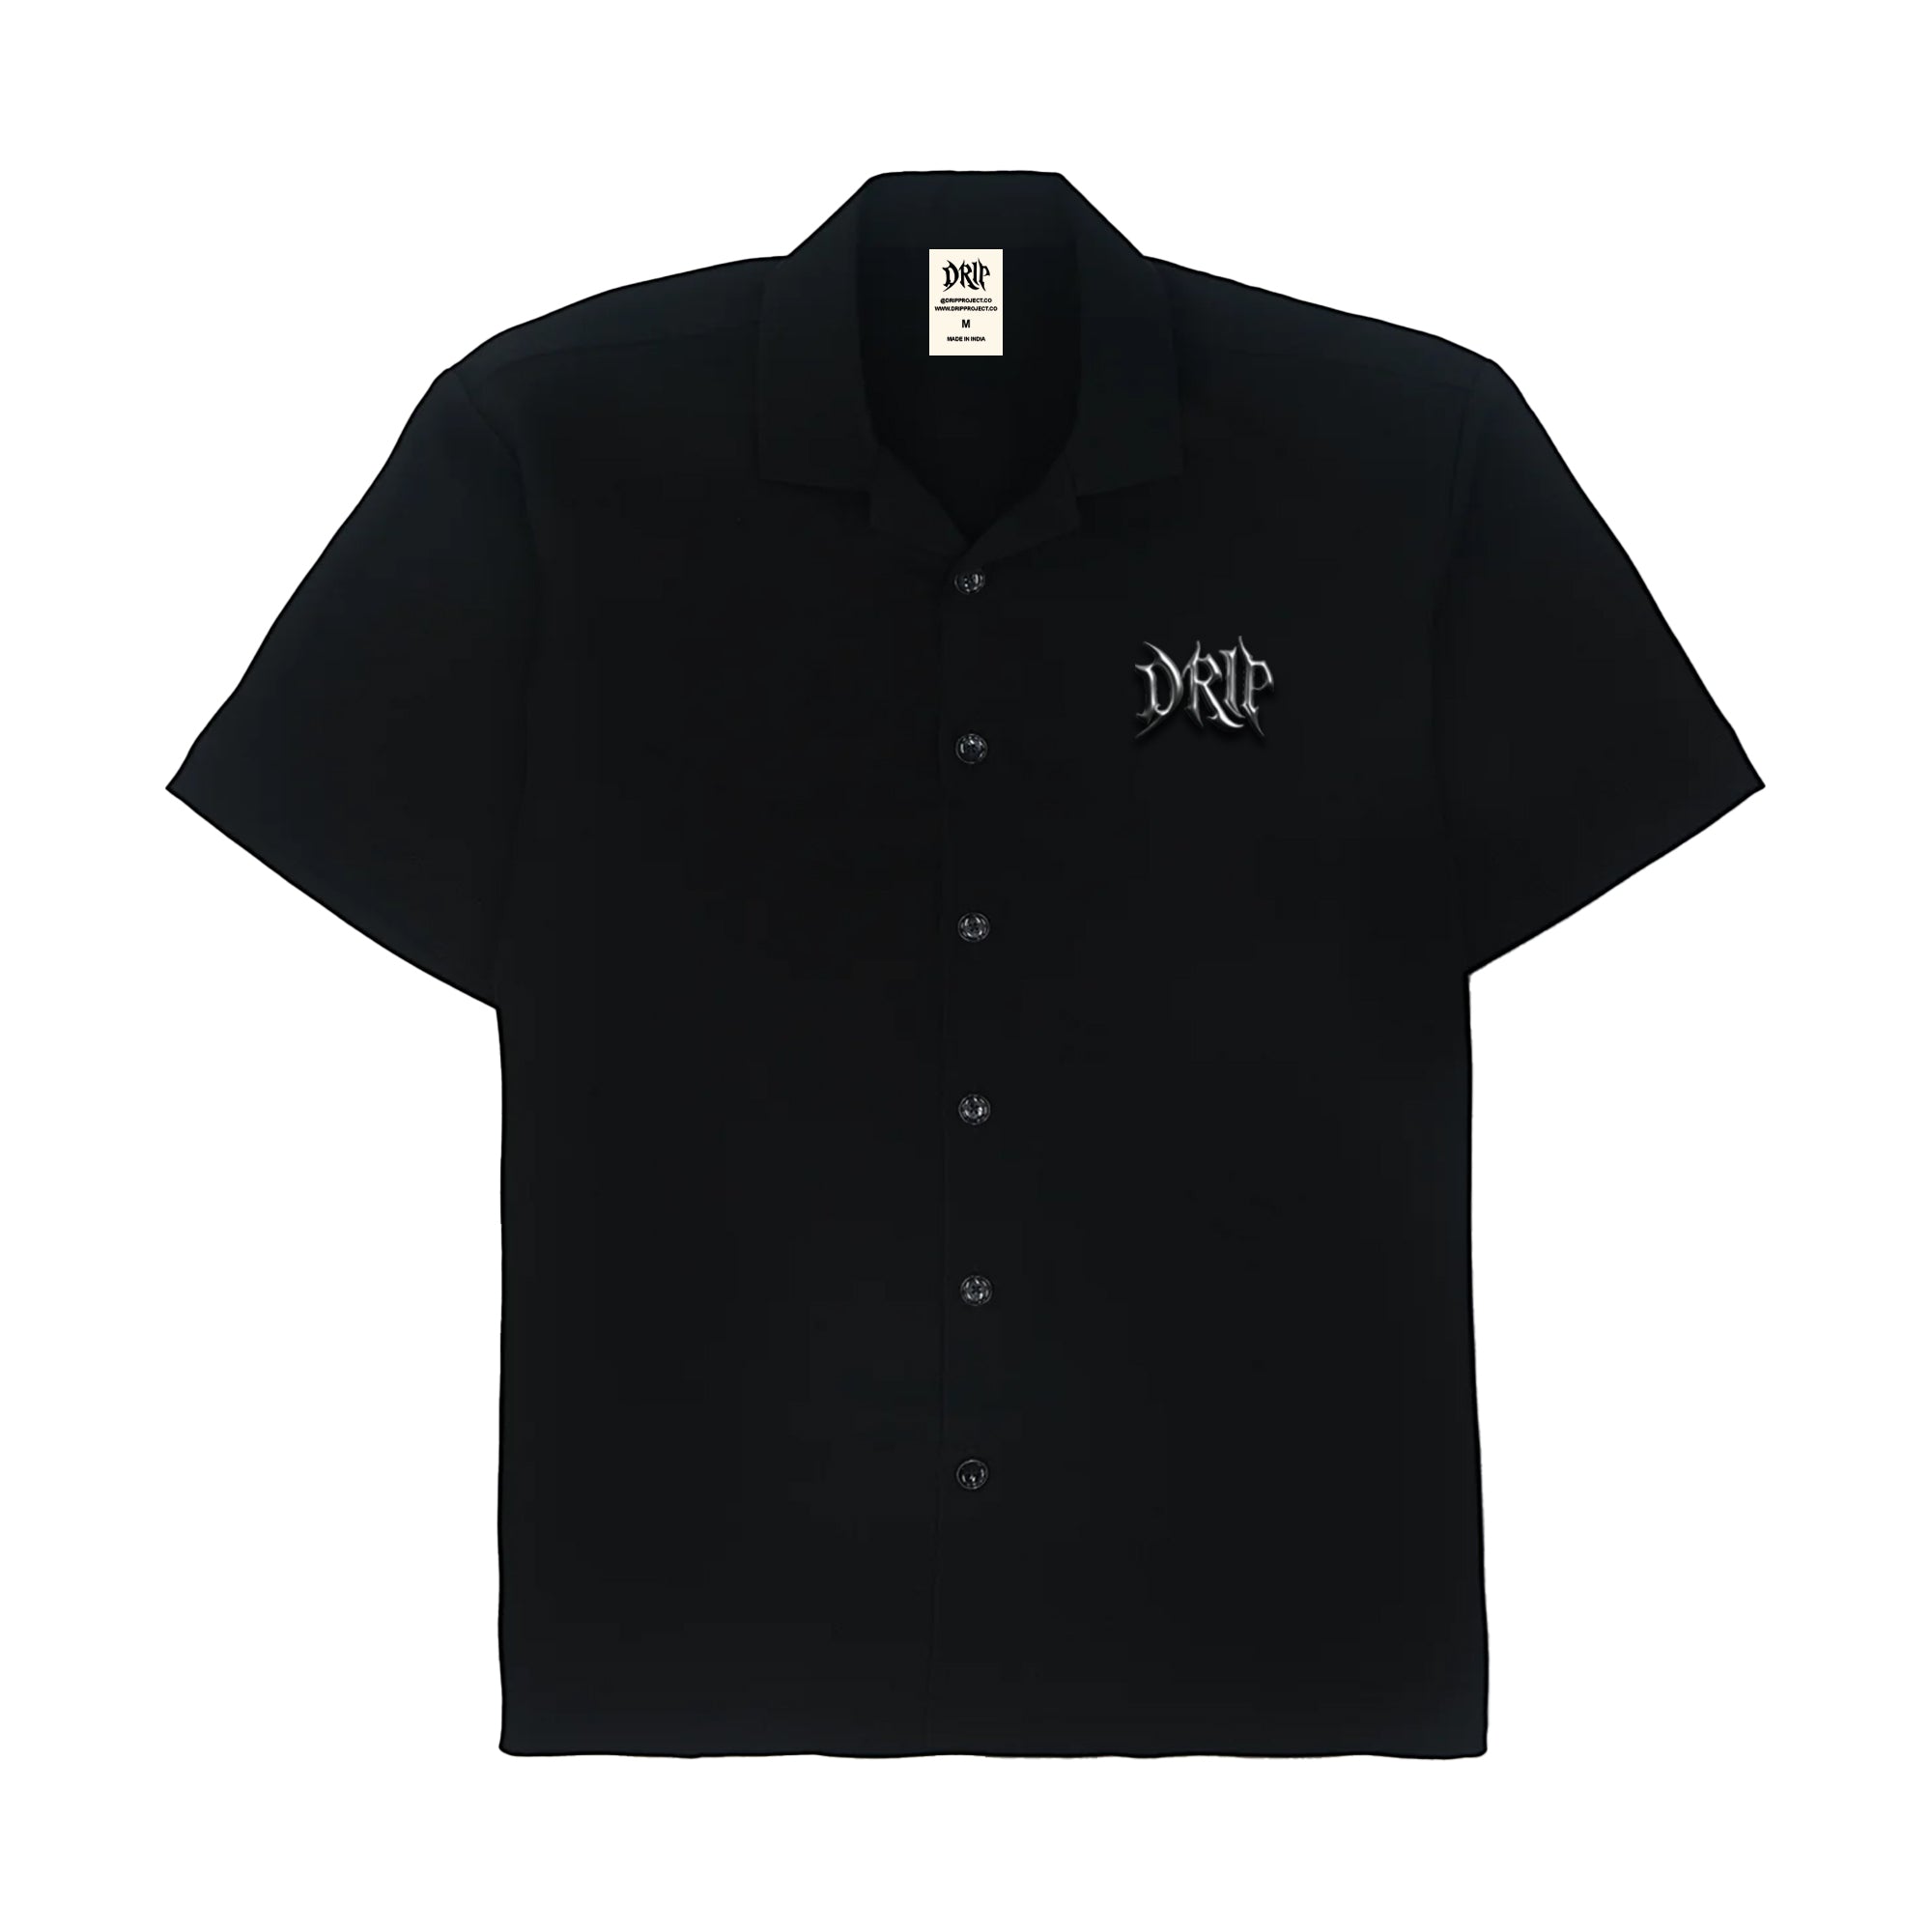 Bowling shirt in Black